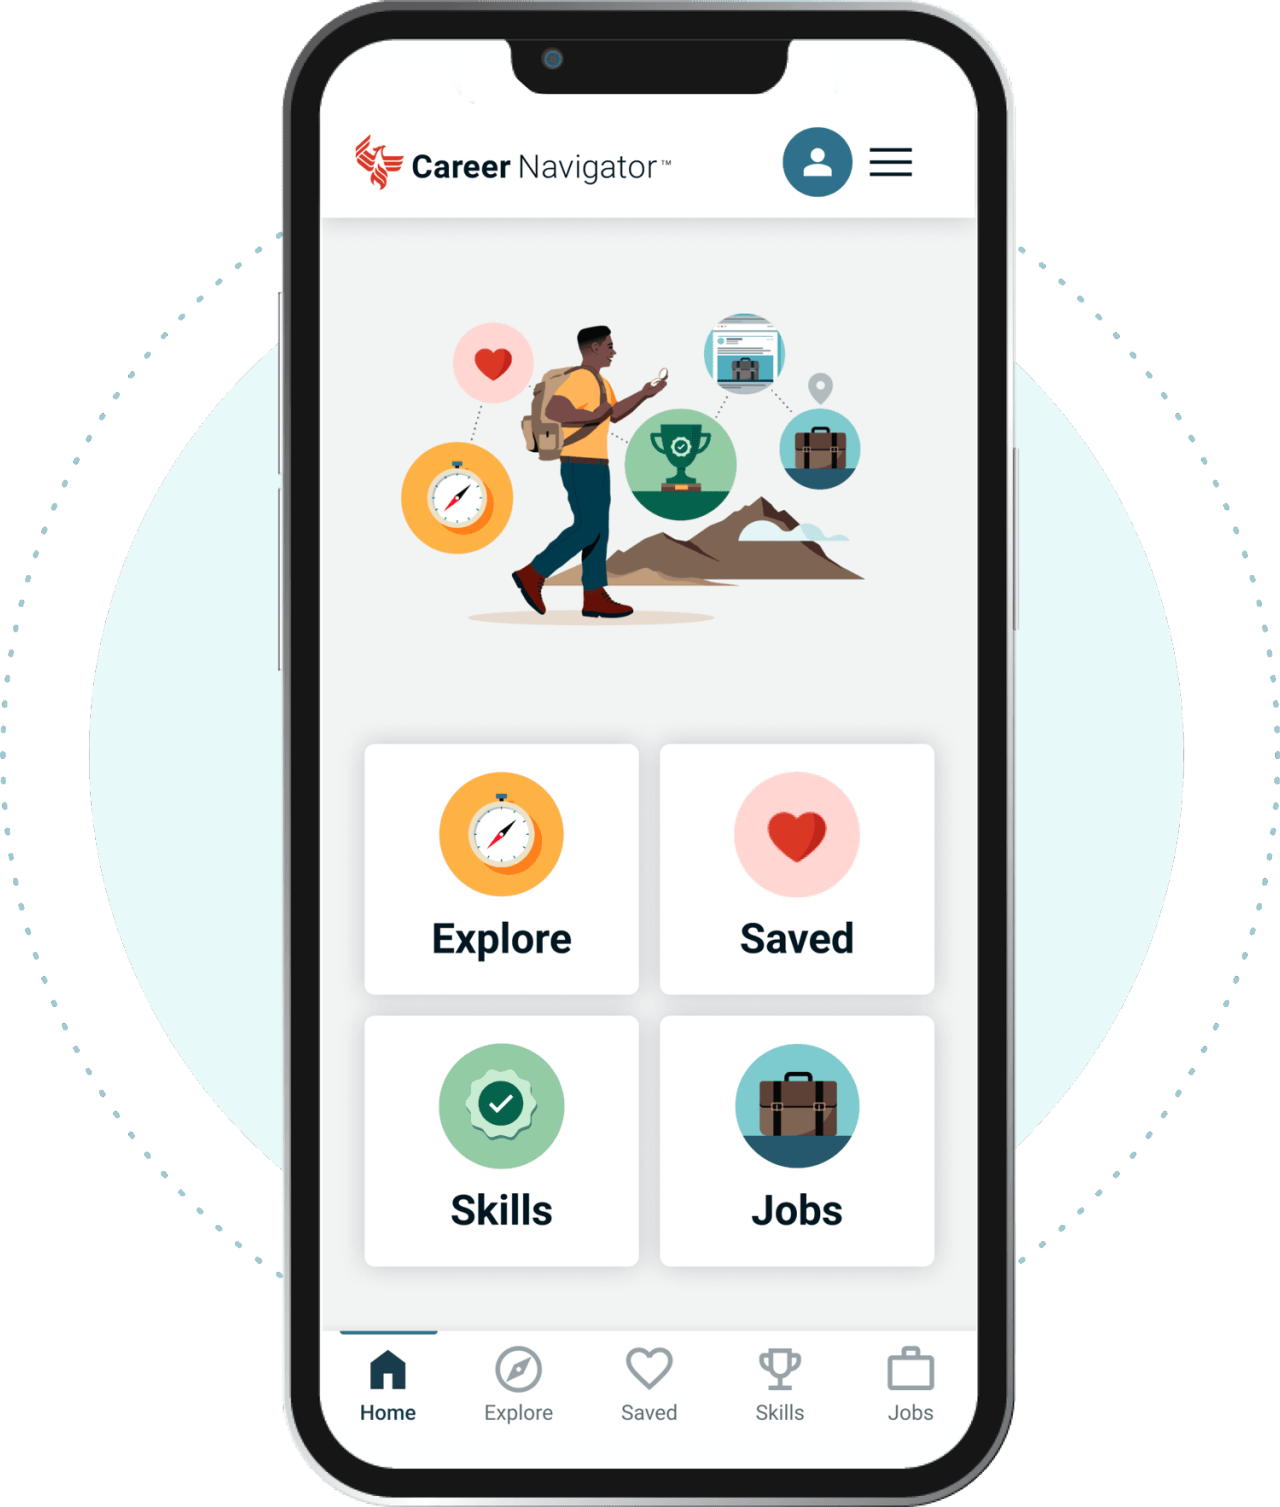 Mobile phone displaying career navigator tools for Explore, Saved, Skills, and Jobs